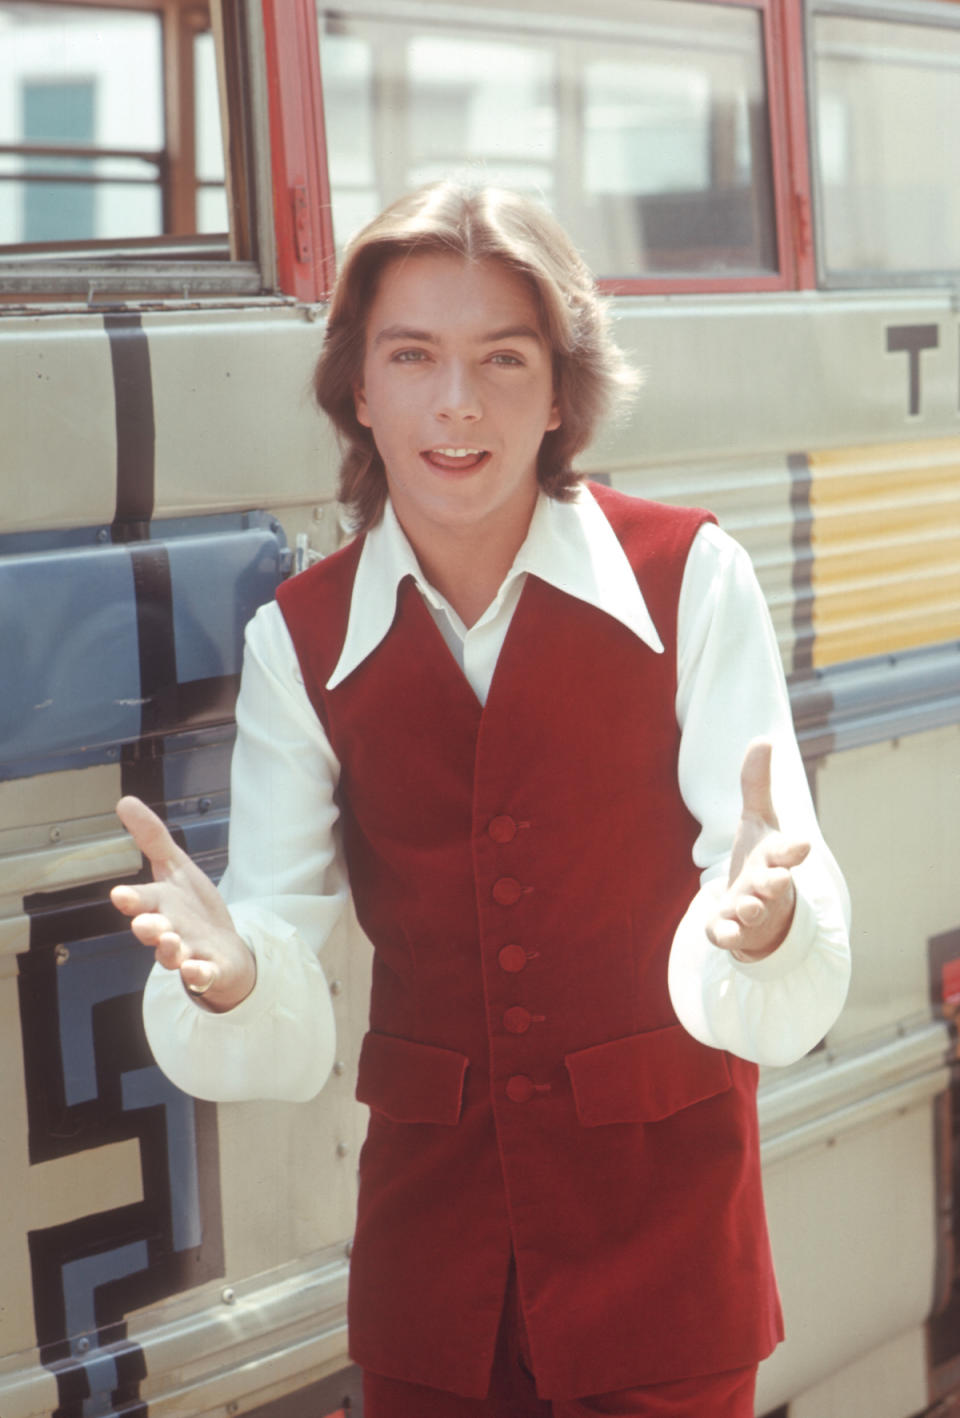 David Cassidy: The Ultimate '70s Teen Idol